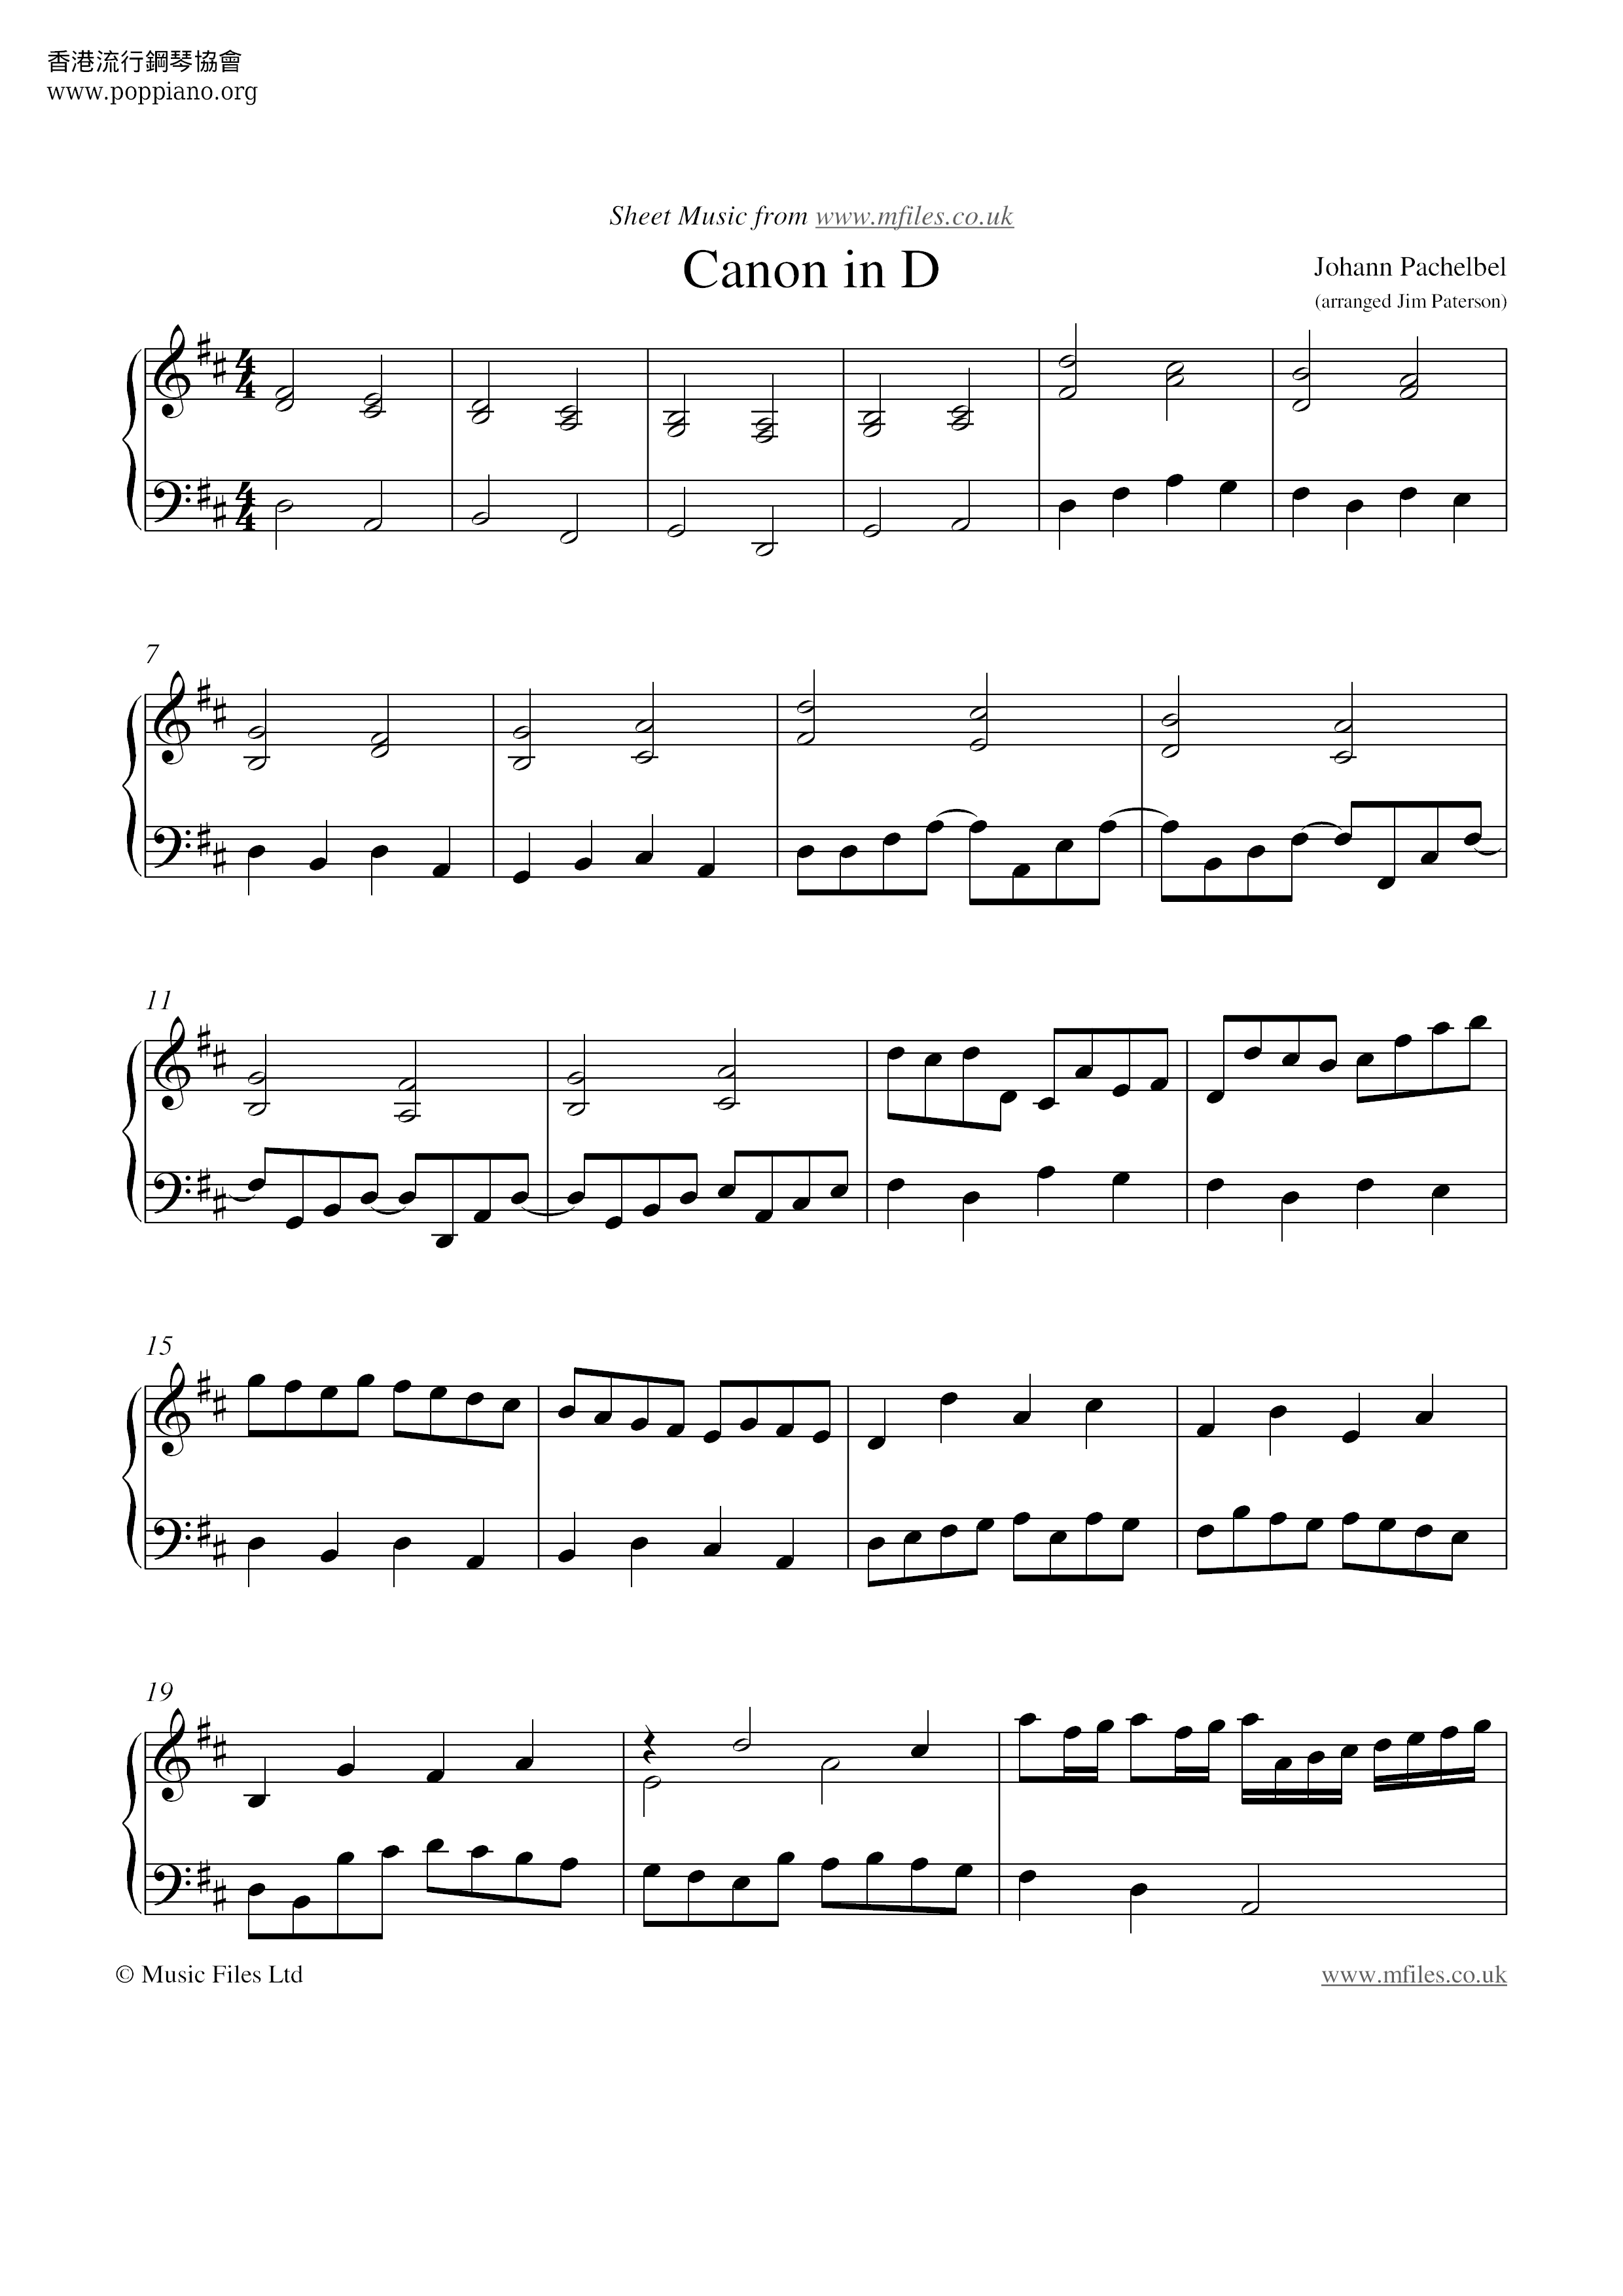 ☆ Pachelbel-Canon In D Sheet Music Pdf, -カノン 楽譜 - Free Score Download ☆